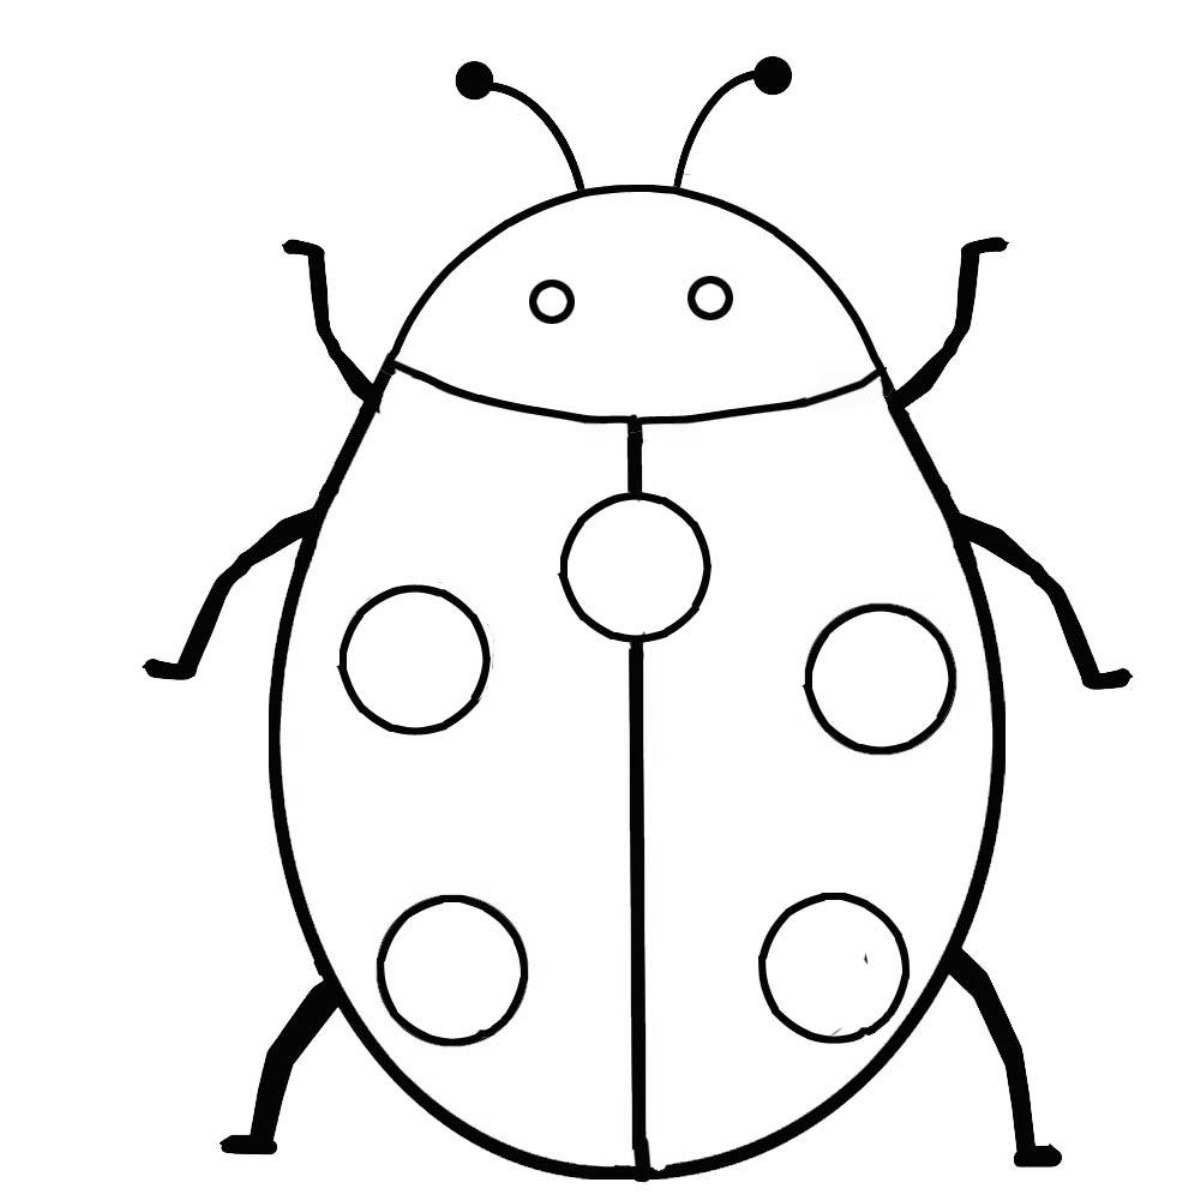 Drawing of a ladybug